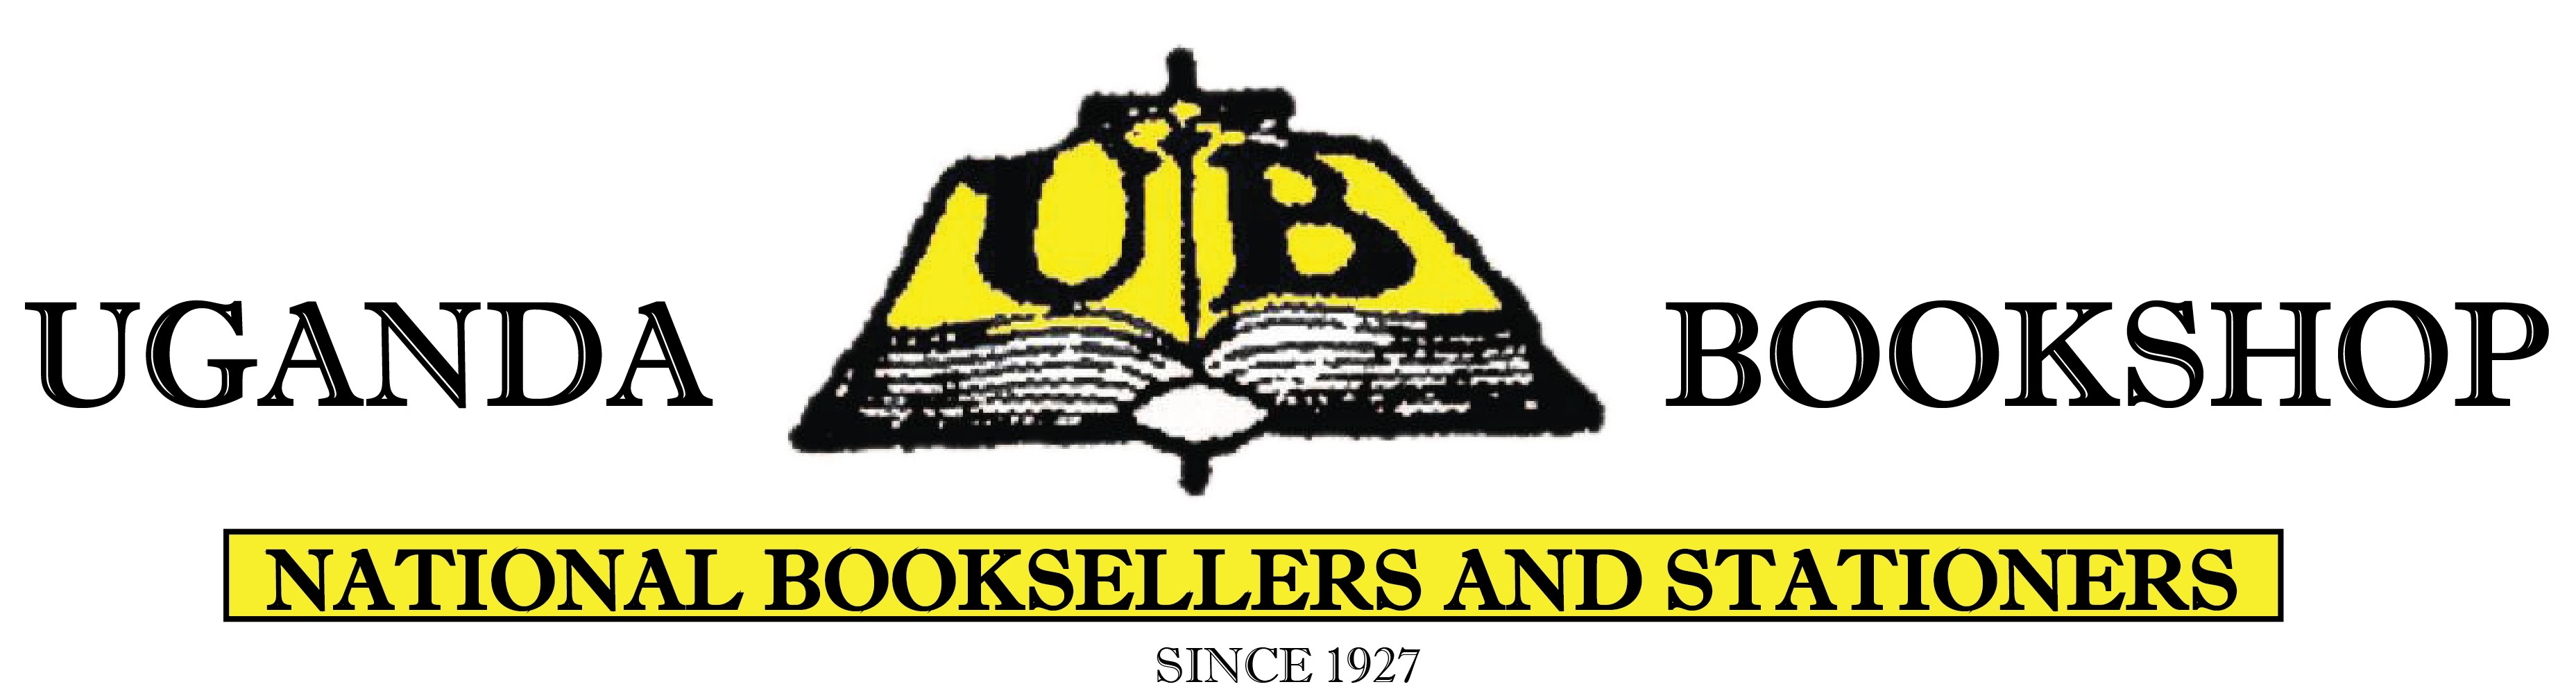 Uganda Bookshop